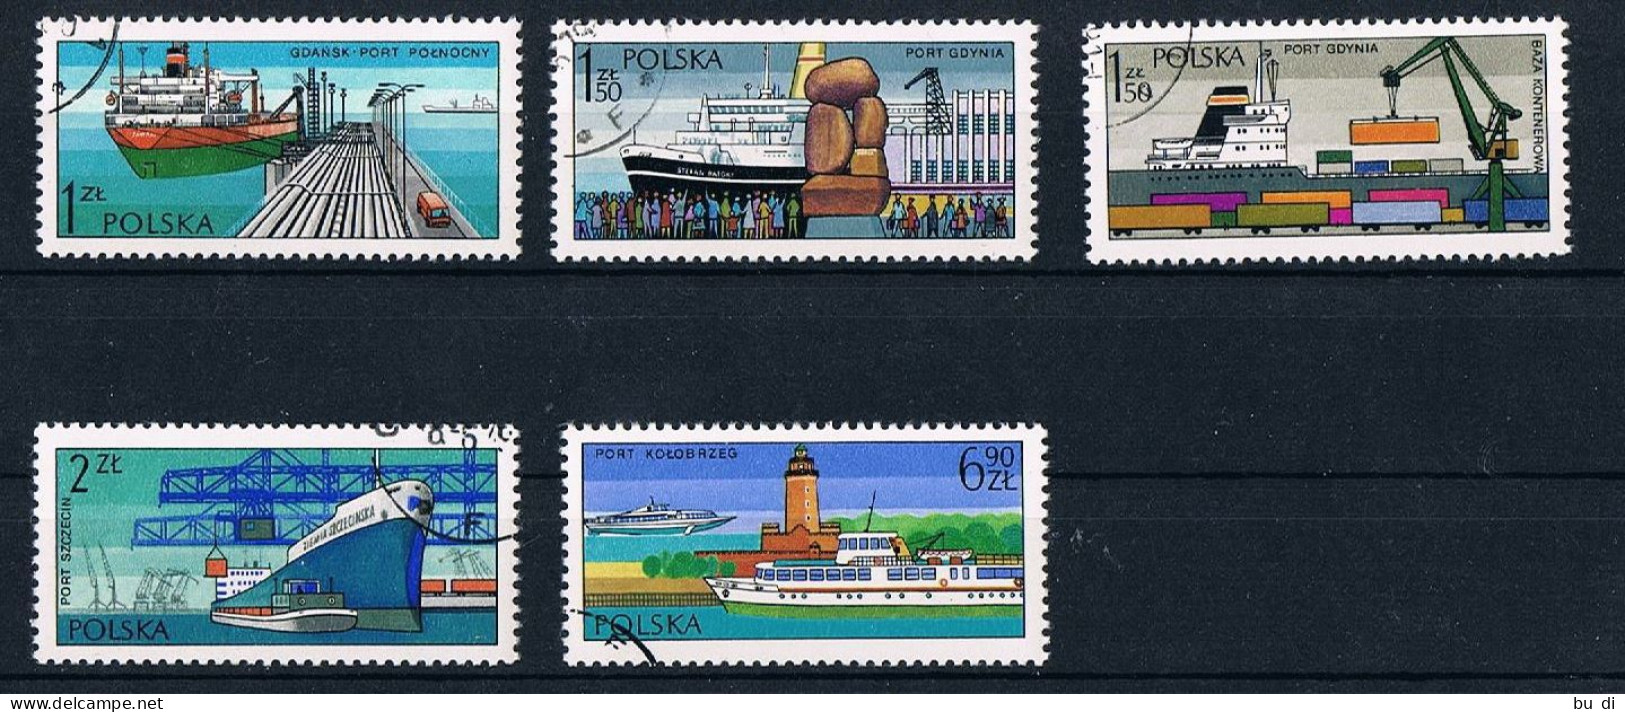 Polen 2475 - 2479 - Hafen In Gdańsk (Danzig), Gdynia Und Szczecin (Stettin) - Schiffe, Kran - Ships, Port, Harbour - Used Stamps